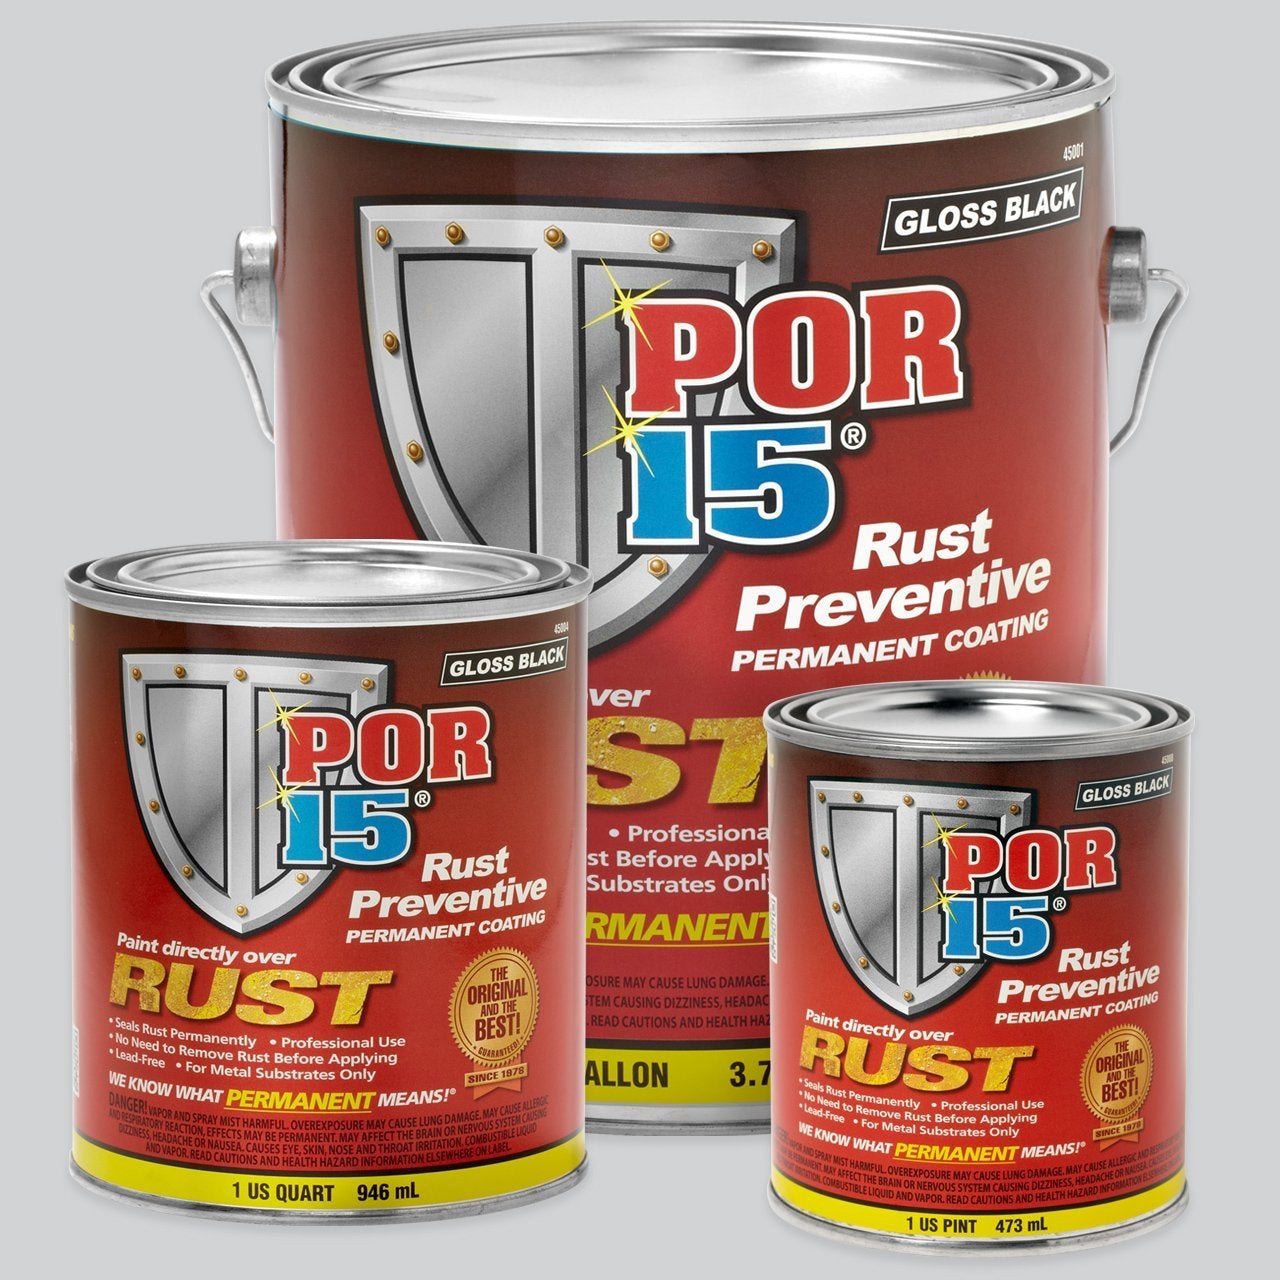 POR-15 Rust Preventive Permanent Coating